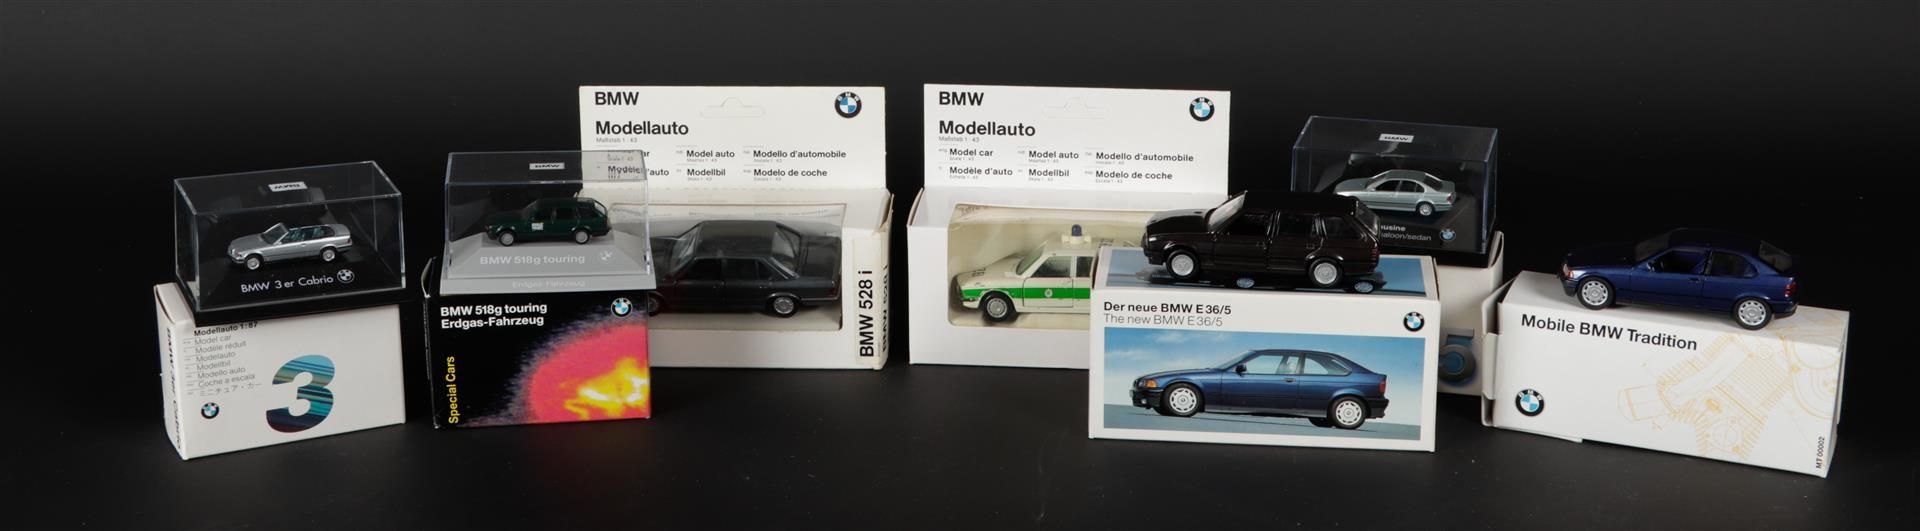 A lot of 7 model cars consisting of a BMW 528i, E36/5, mobi